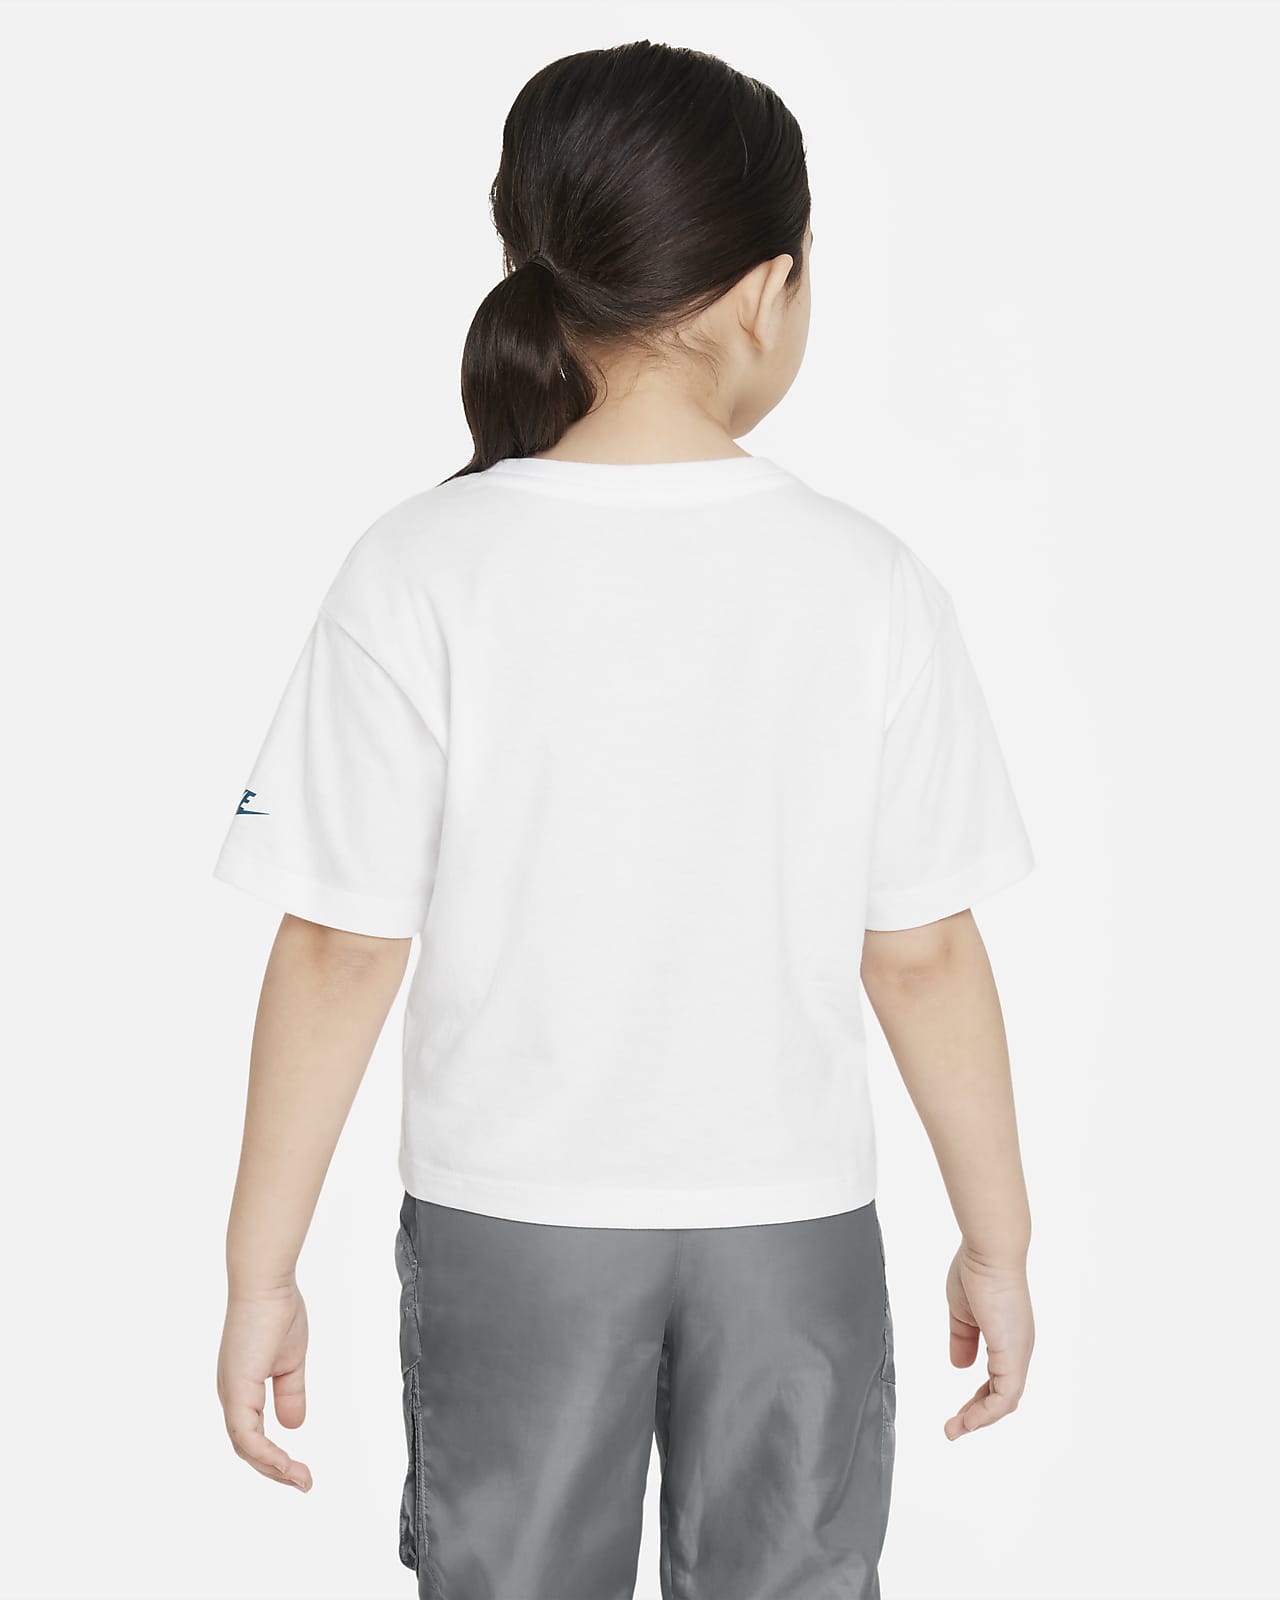 Nike Sci-Dye Tee Kids T-Shirt. Little Boxy